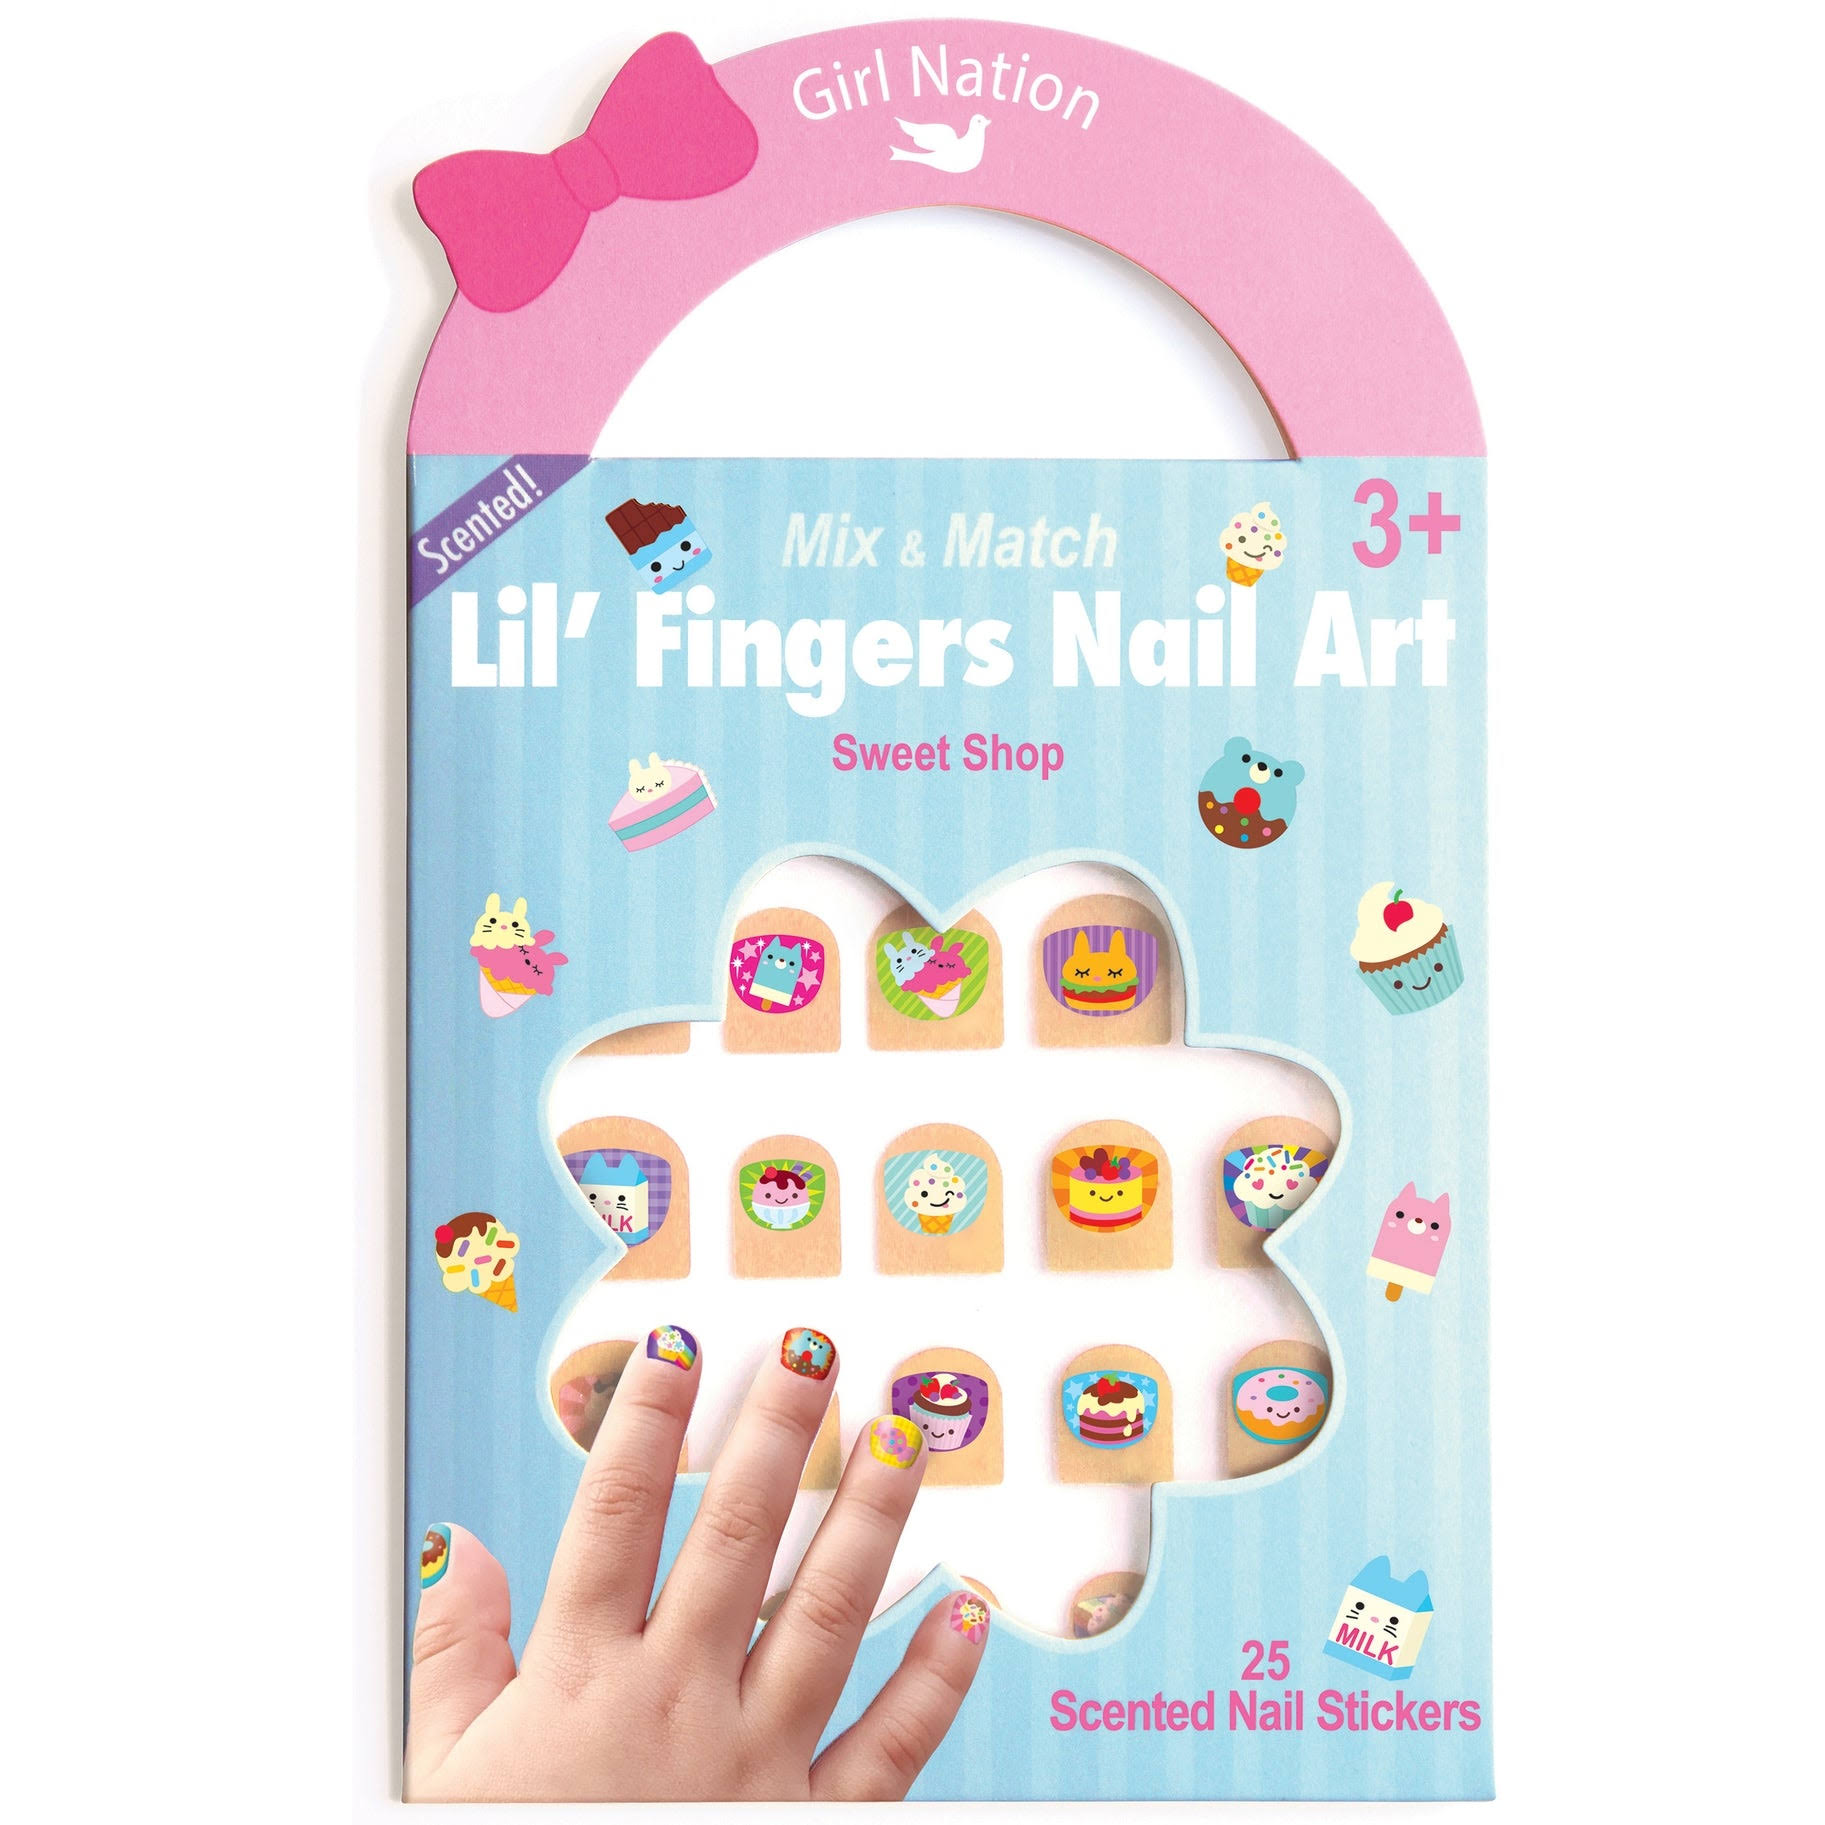 Lil' Fingers Nail Art by Girl Nation, Cute Nail Art Designs, Sweet Shop